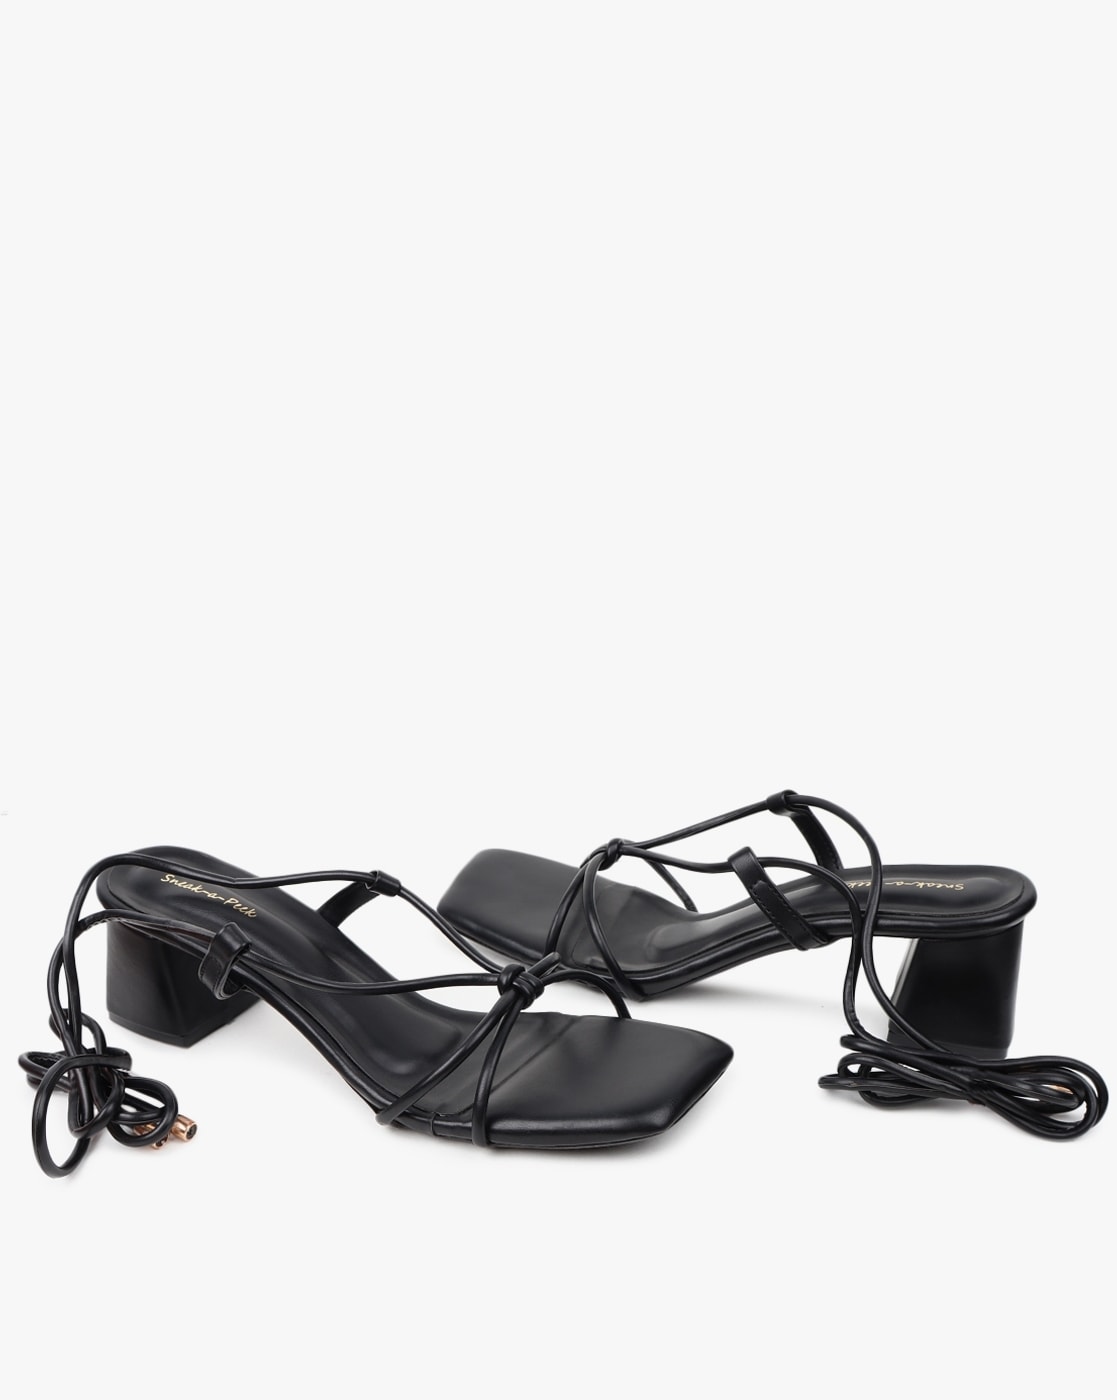 WIFKLSIIPG stiletto heel sandals sandals strappy sandals heels India | Ubuy